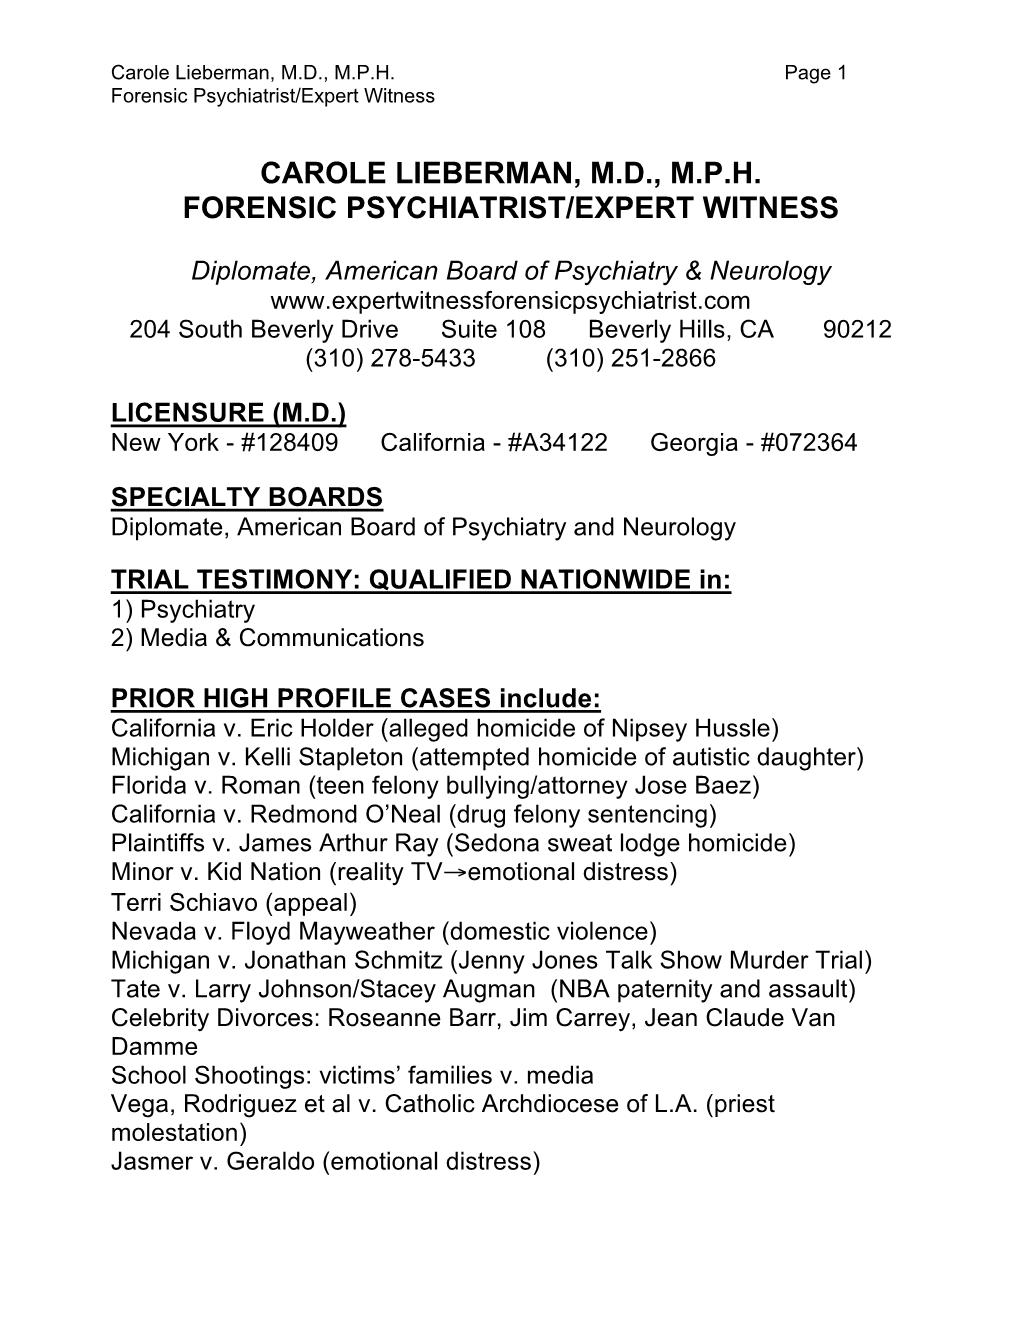 Carole Lieberman, M.D., M.P.H. Forensic Psychiatrist/Expert Witness